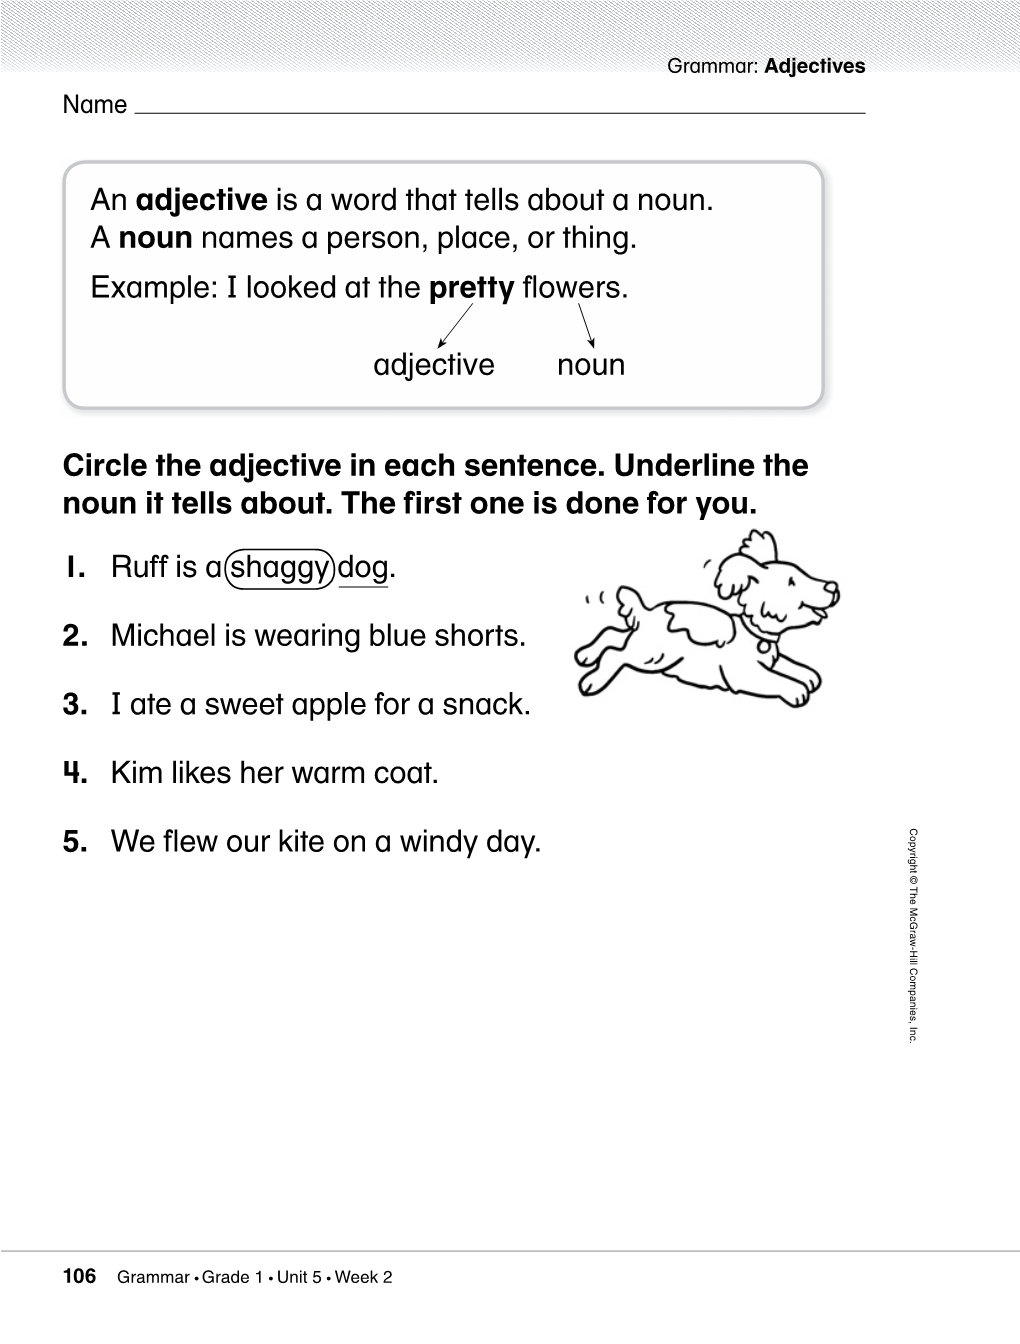 10-examples-of-comparative-adjective-sentences-englishteachoo